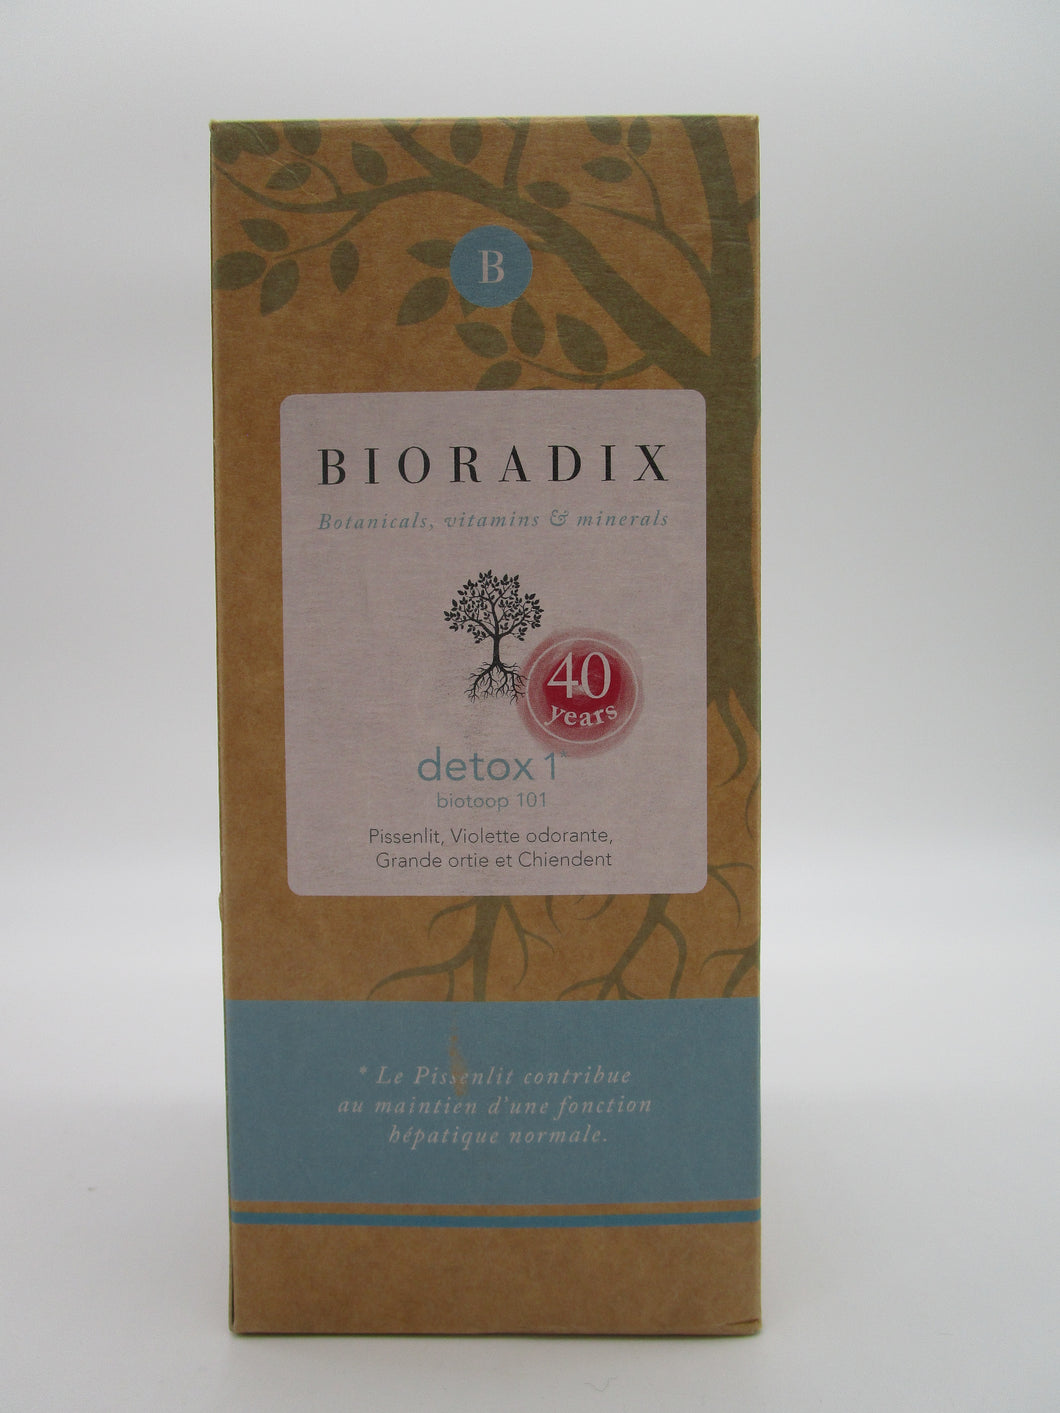 Bio-radix detox 1 biotoop 101